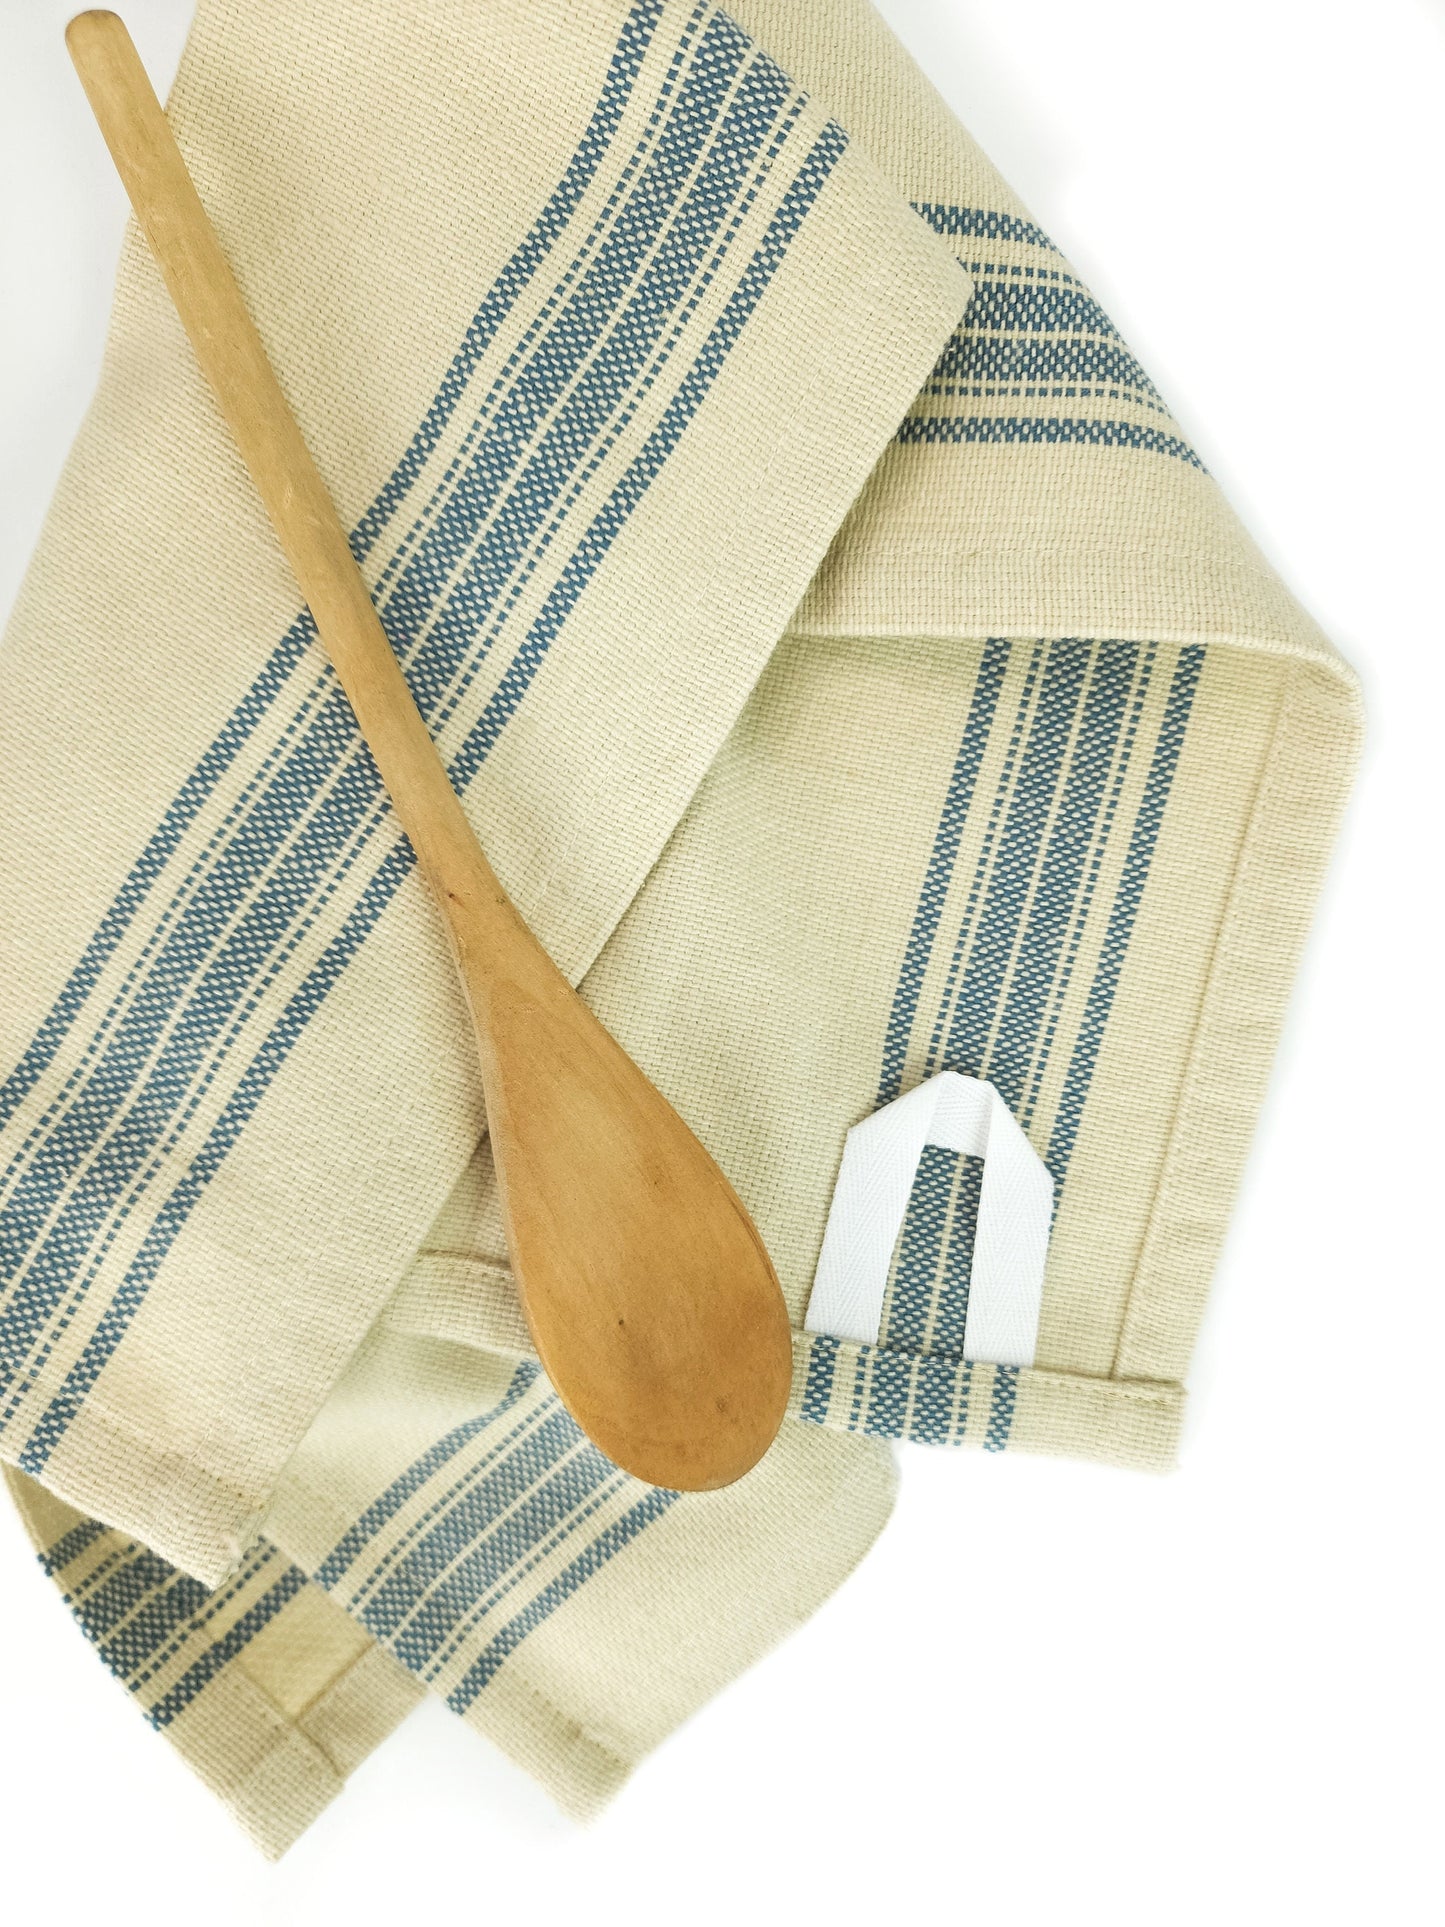 Blue Striped Towel, Light Blue Grain Sack Towel